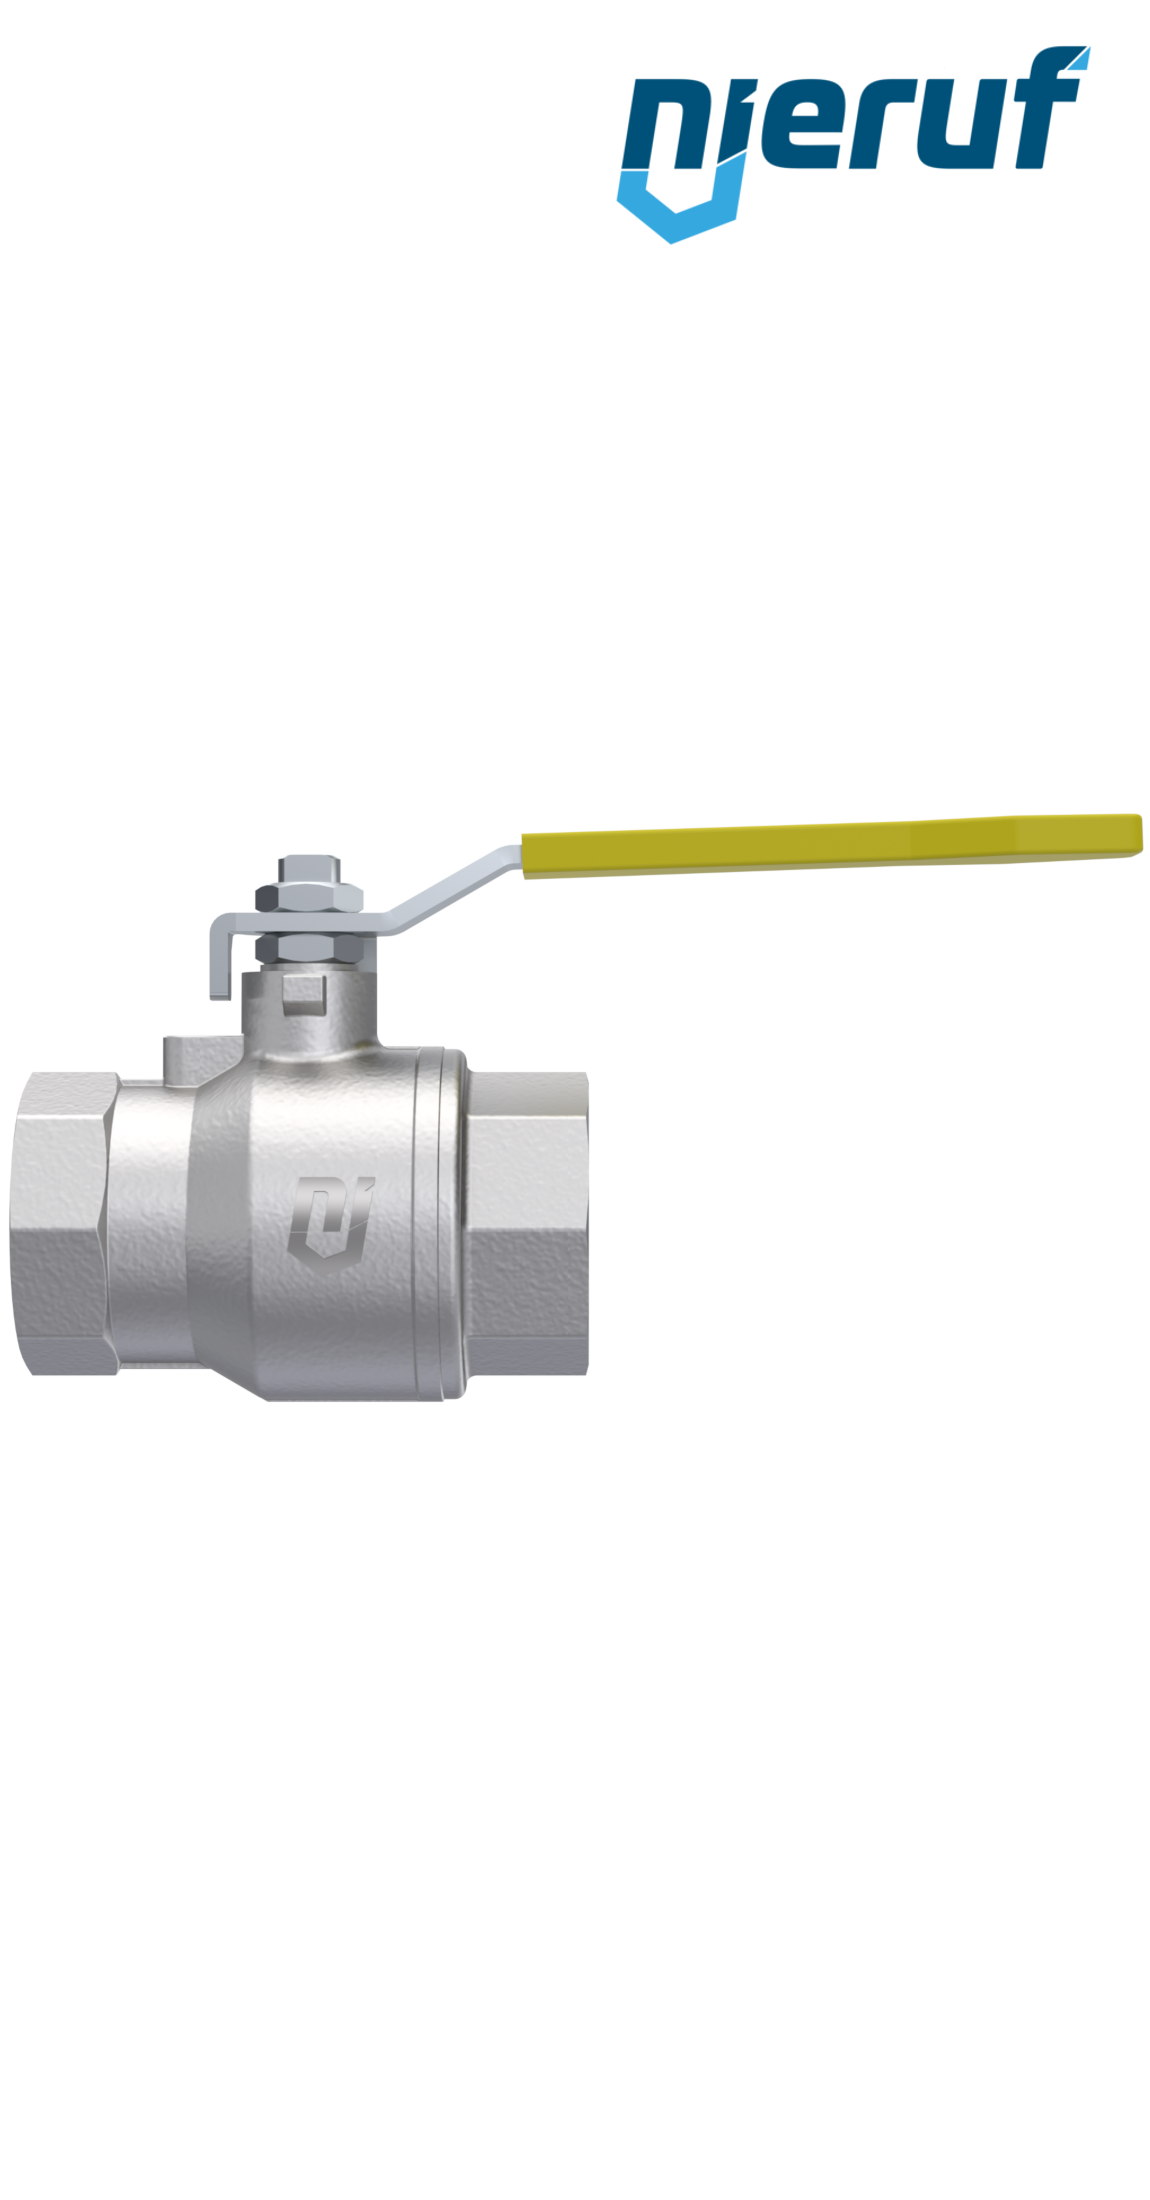 Gas ball valve stainless steel DN15 - 1/2" inch GK07 Biogas DVGW